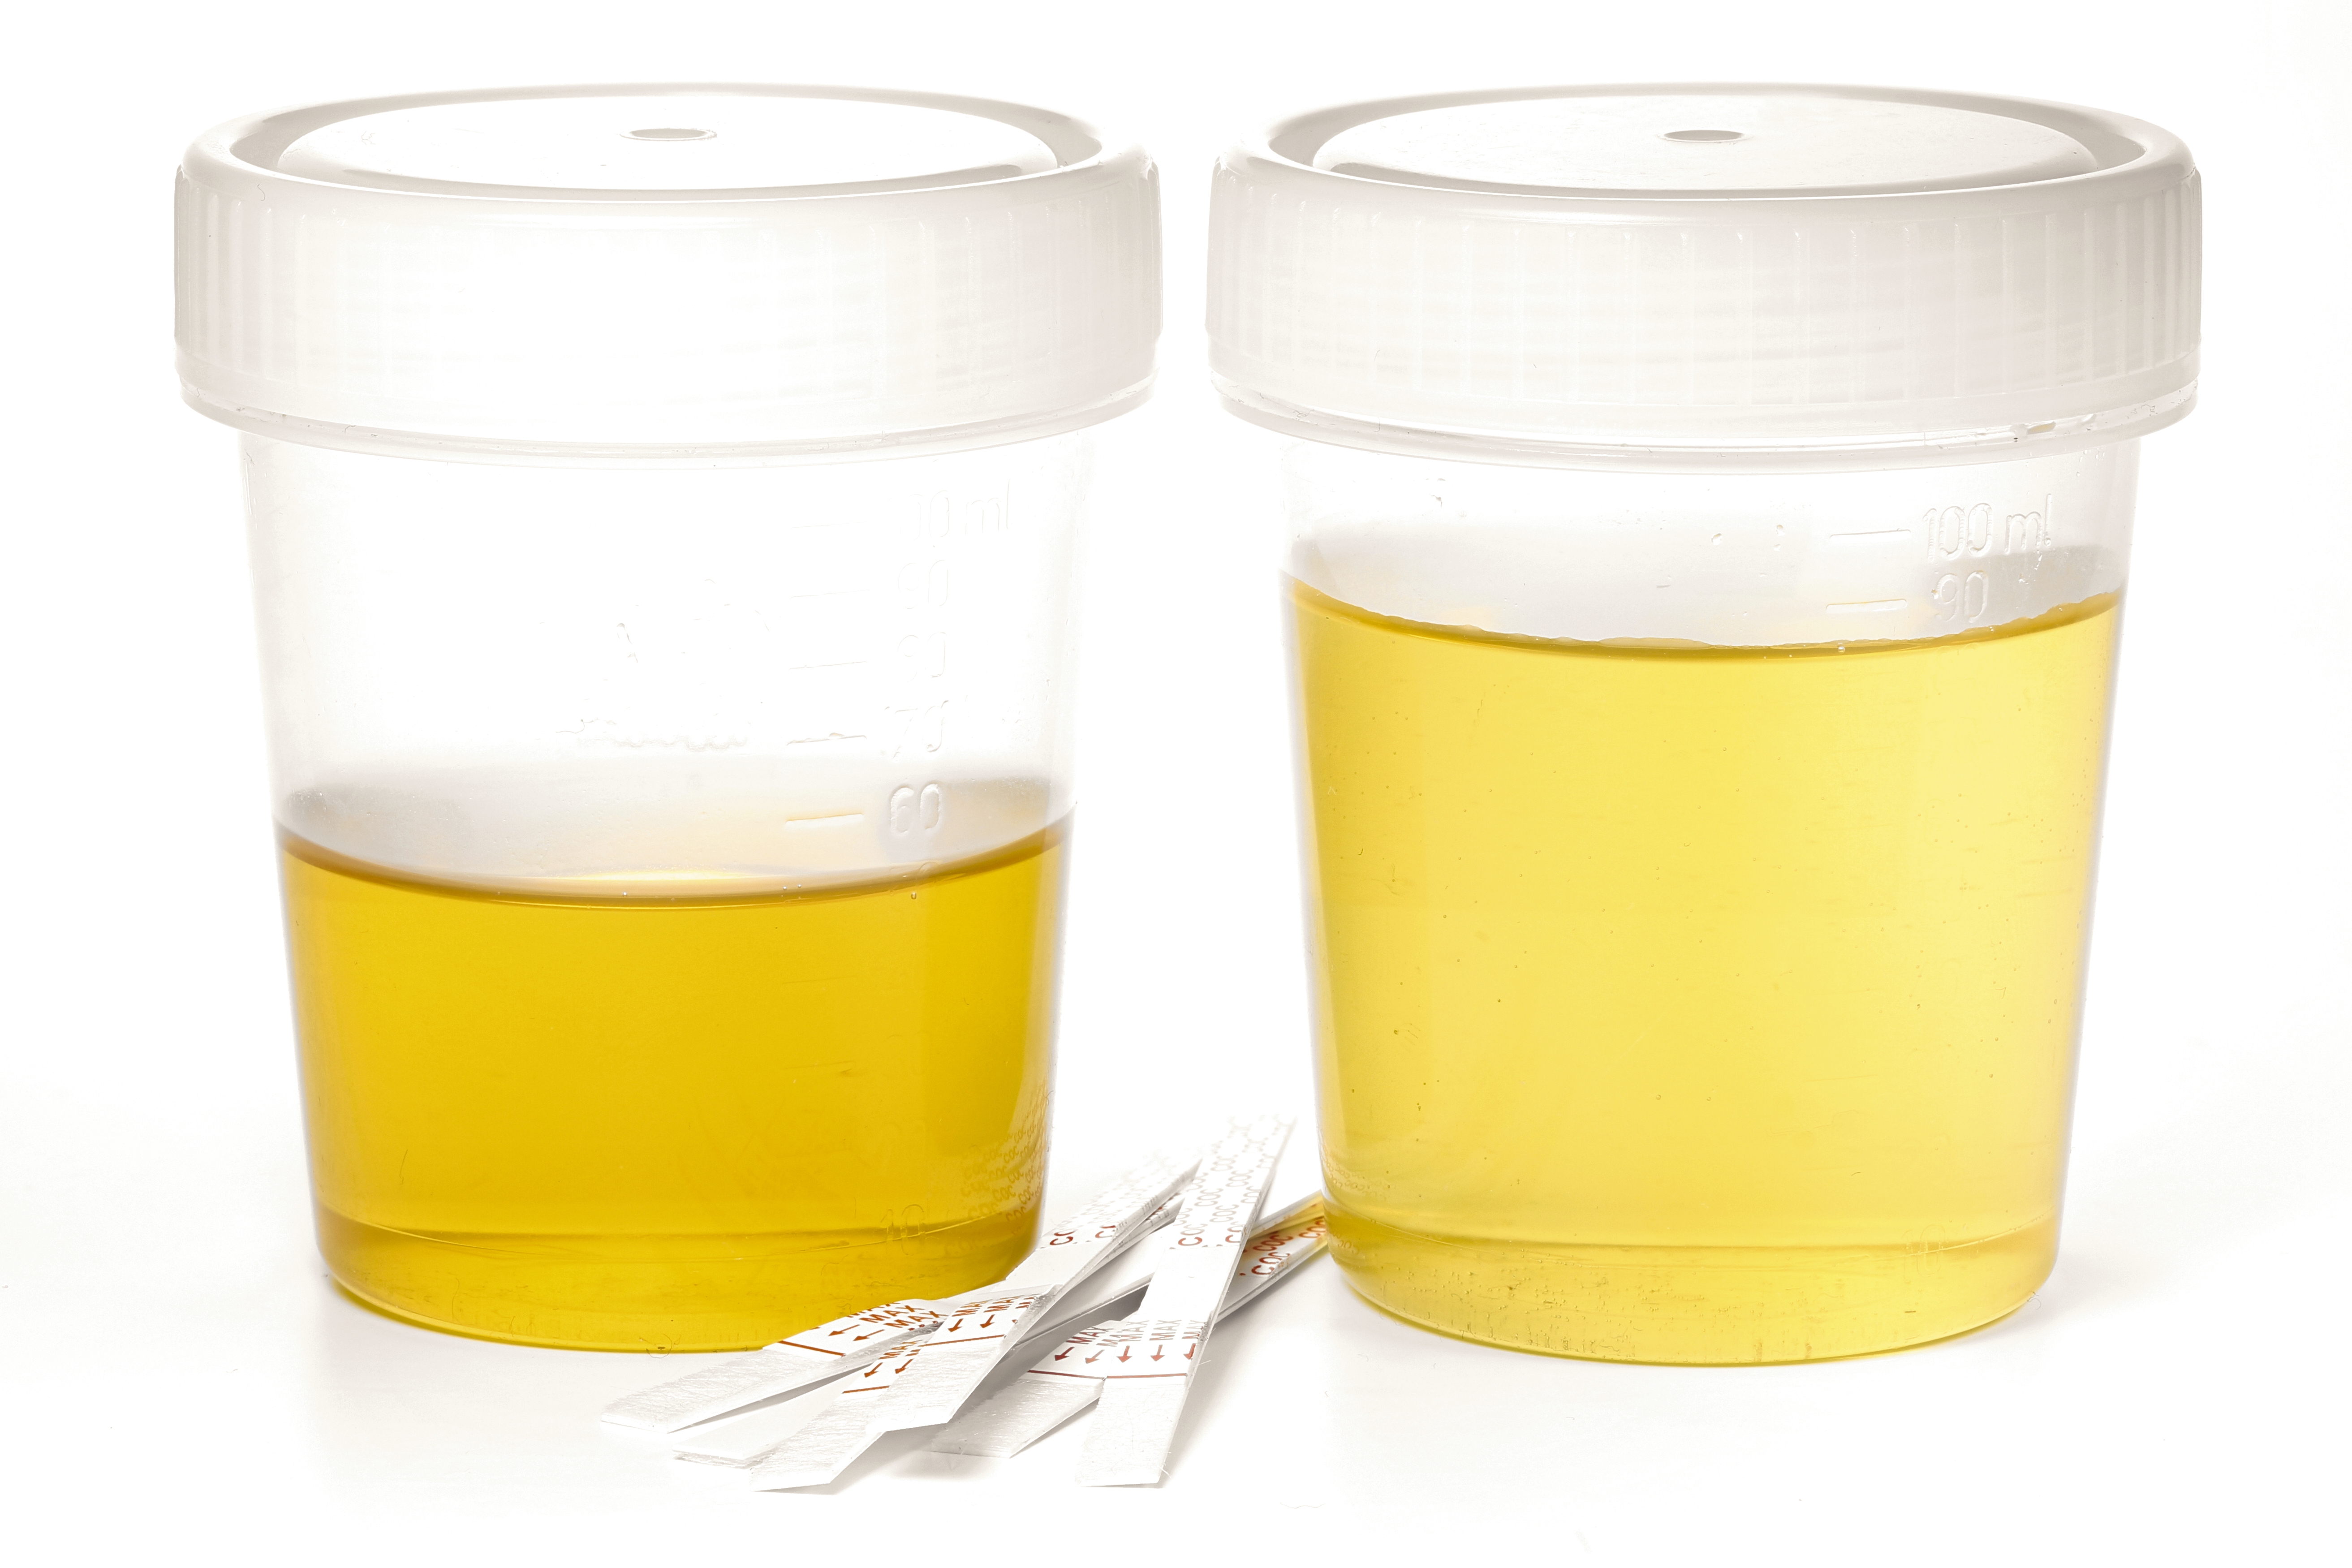 Urine samples in specimen cups